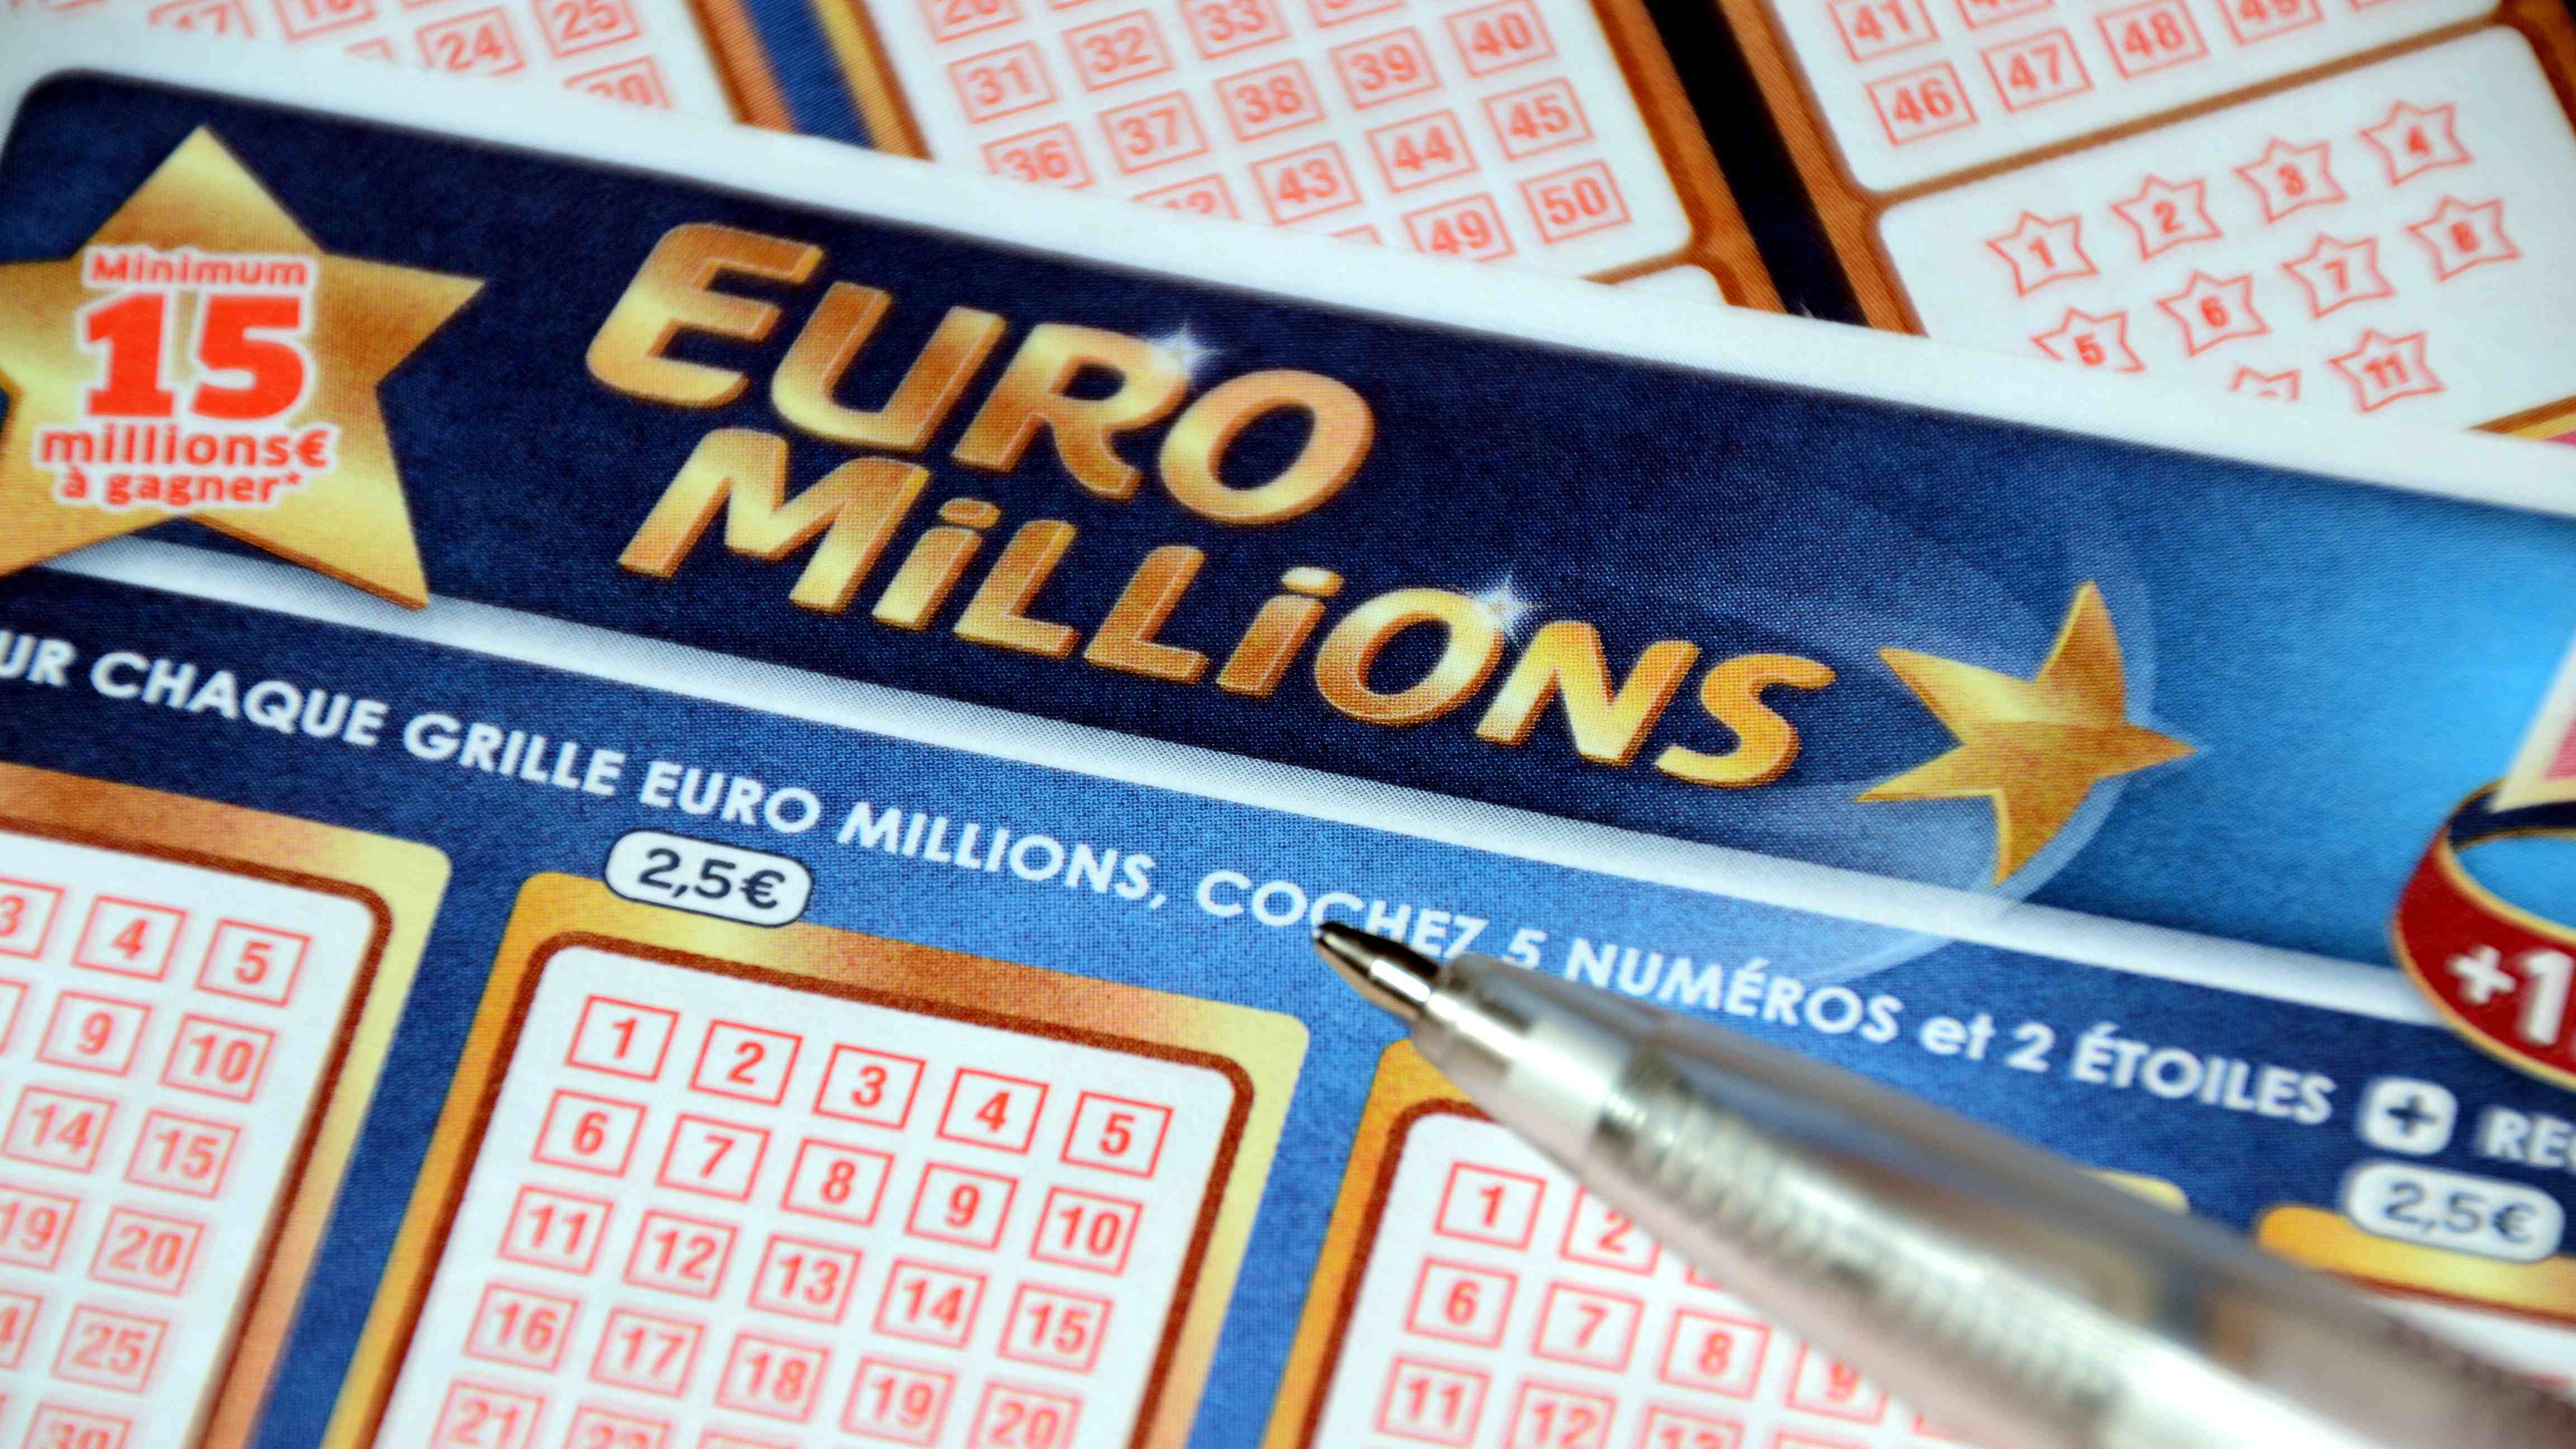 “I was stupid”: Mum falls victim to $225 million lottery scam